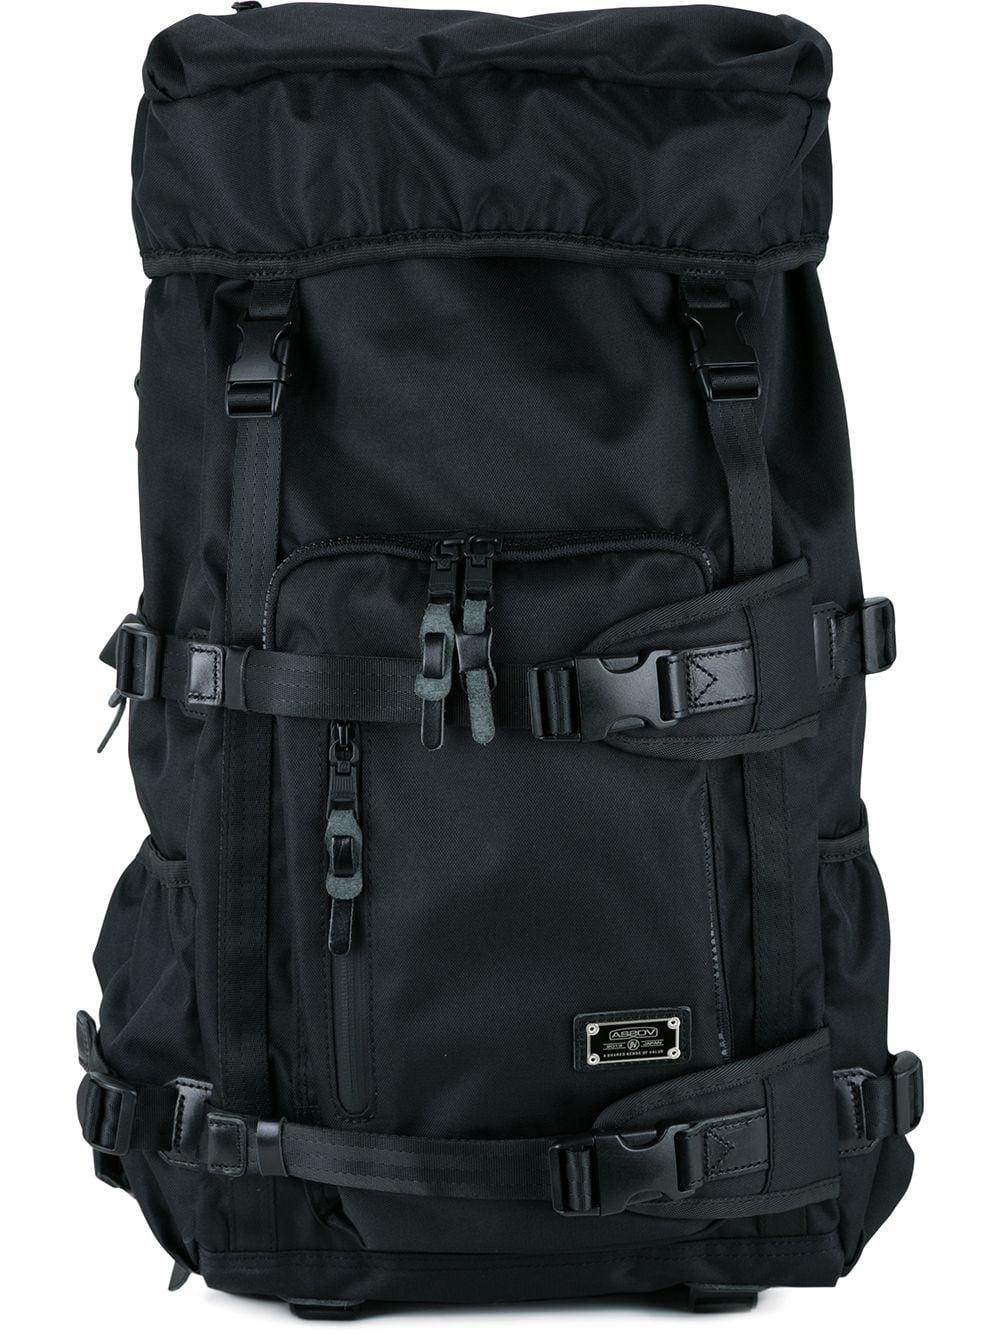 AS2OV Cordura Dobby 305d Backpack in Black for Men - Lyst